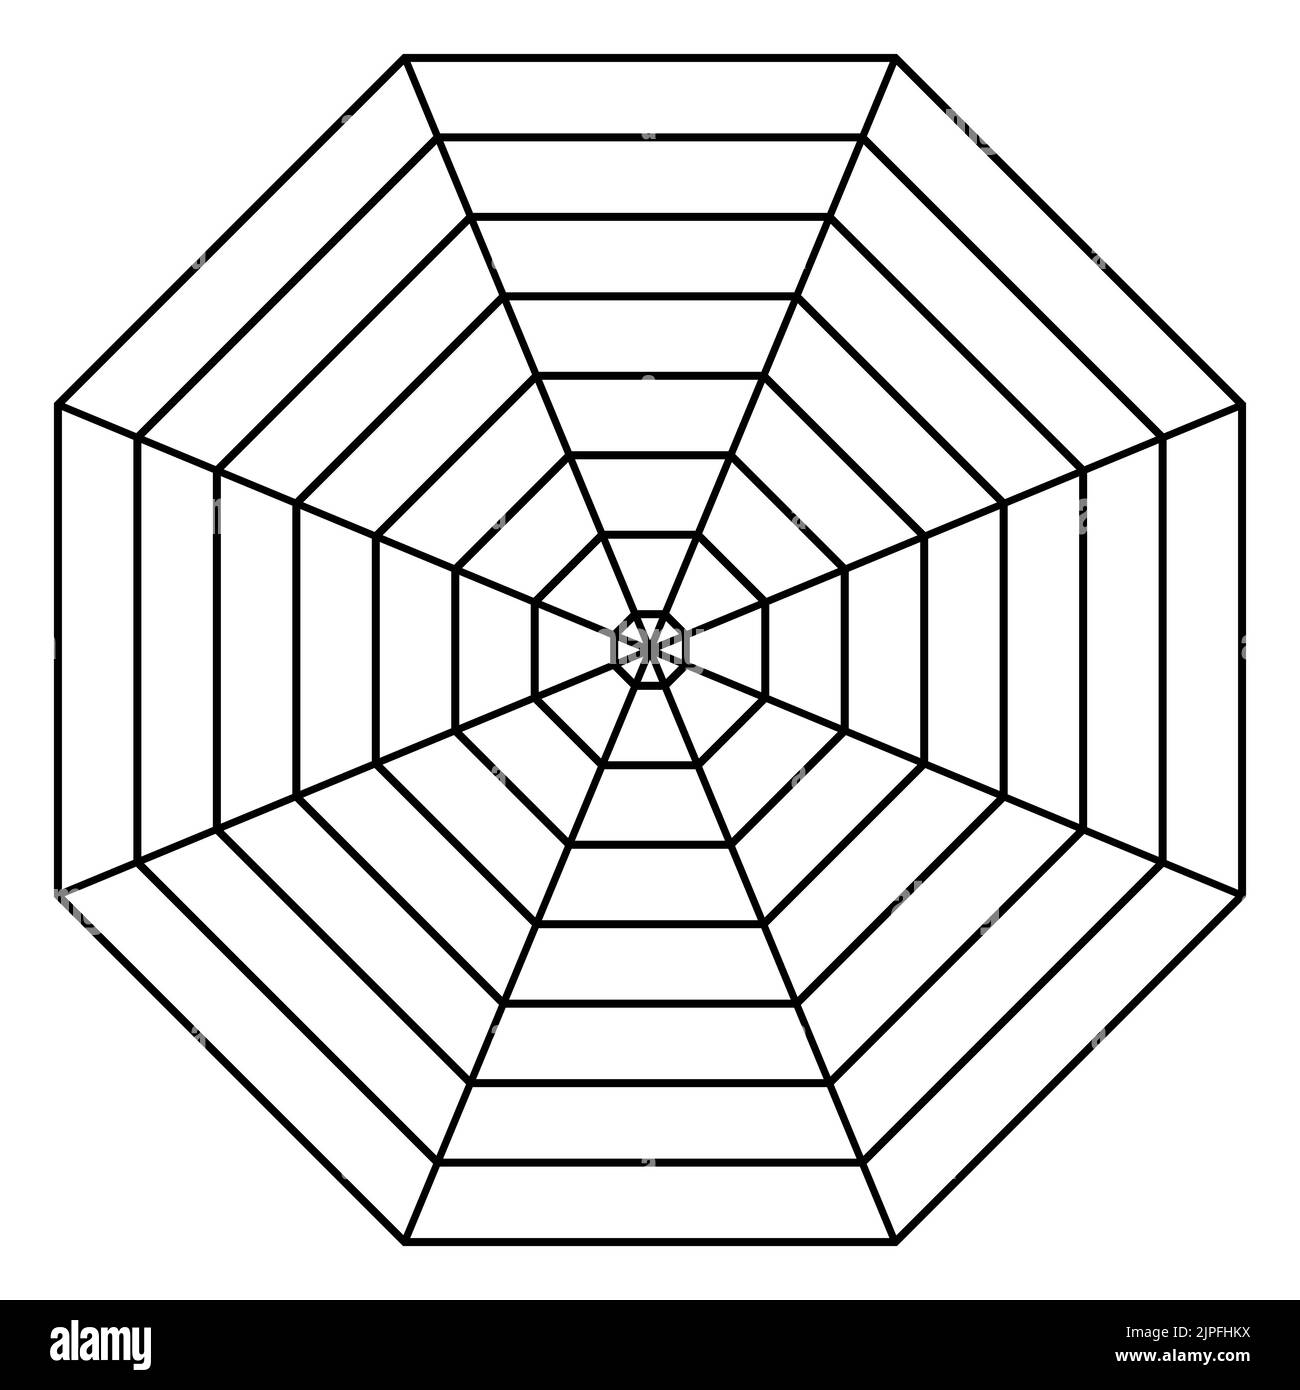 Octagon 8 spider grid pattern radar Template, 8S spider diagram Stock Vector